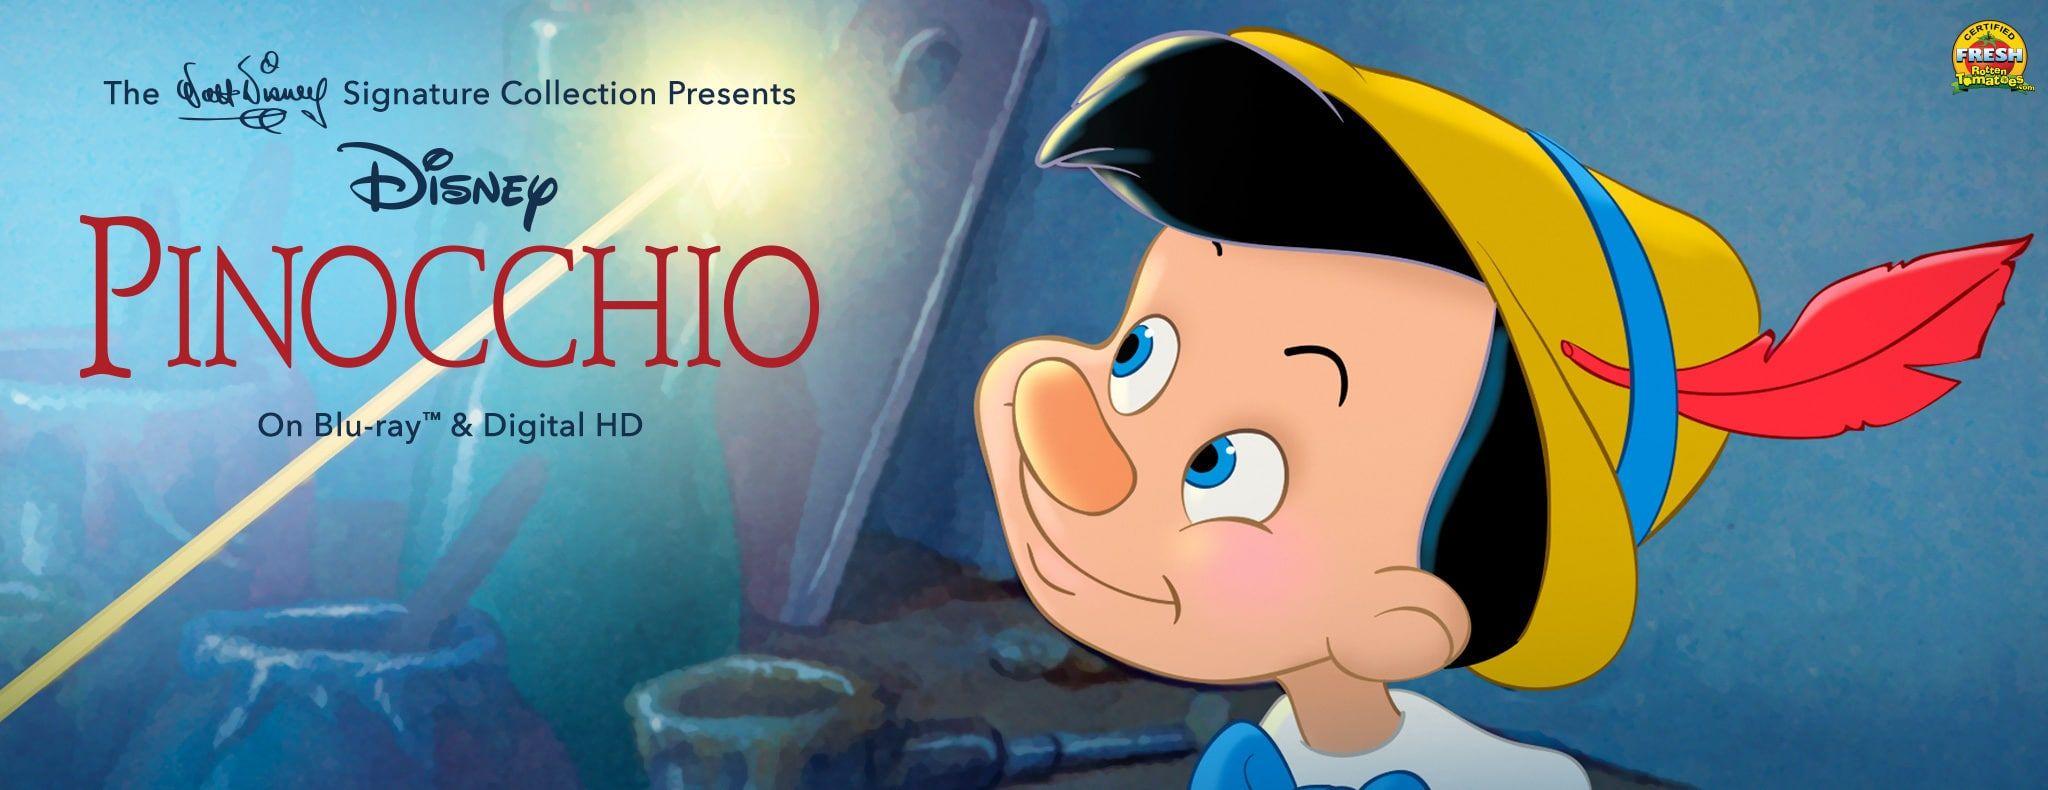 Pinocchio Walt Disney Presents Logo - Pinocchio